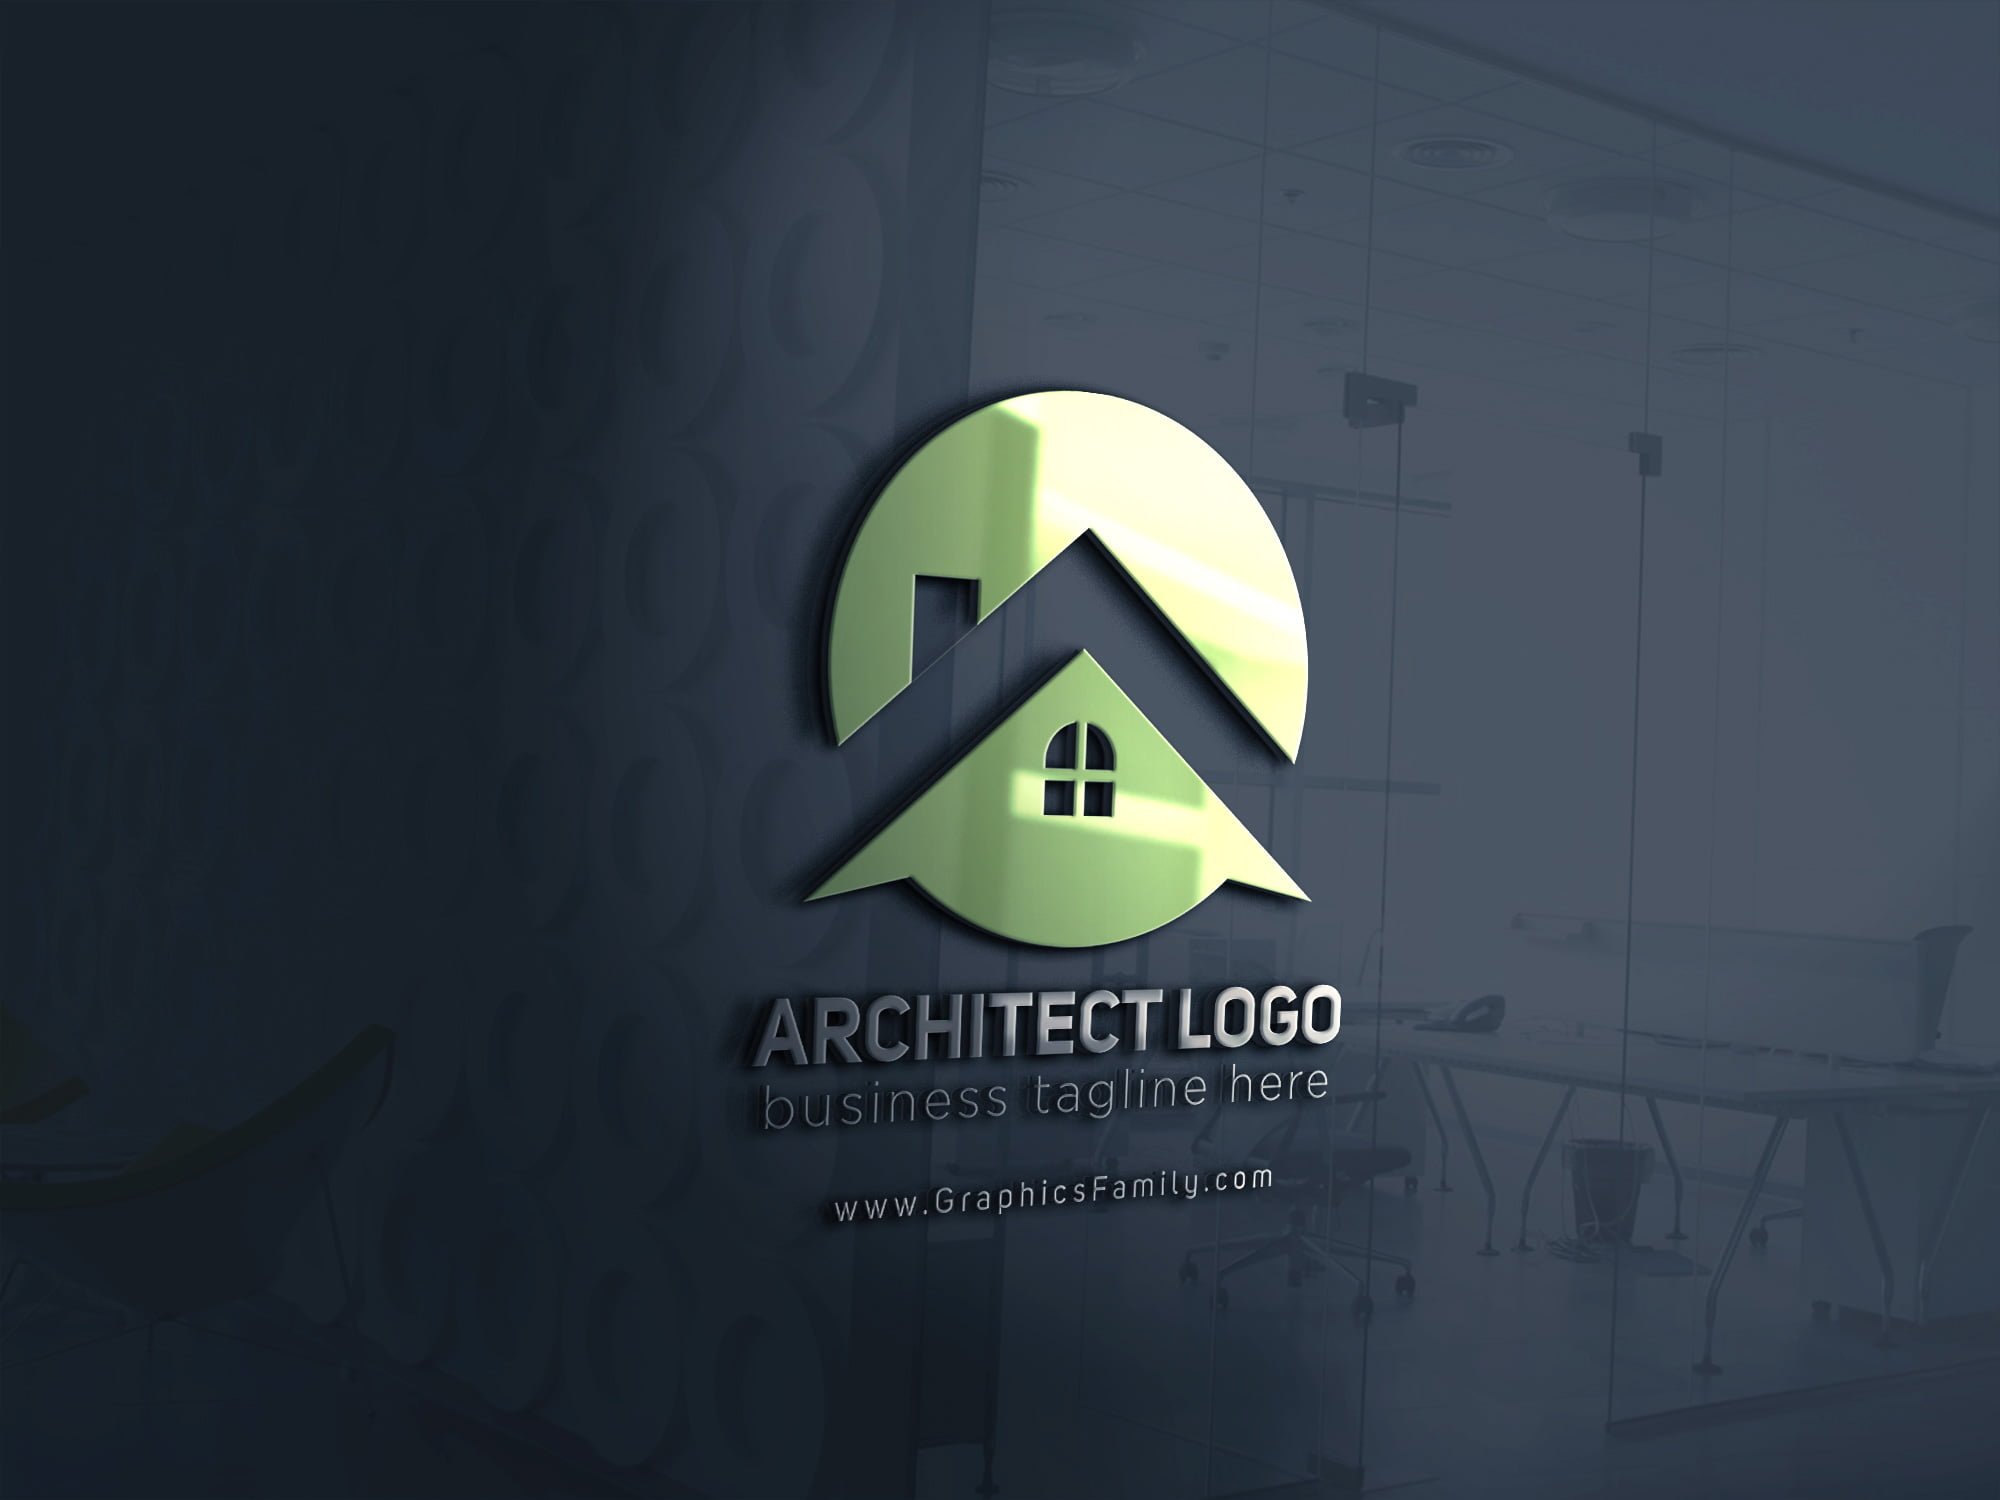 architecture logos